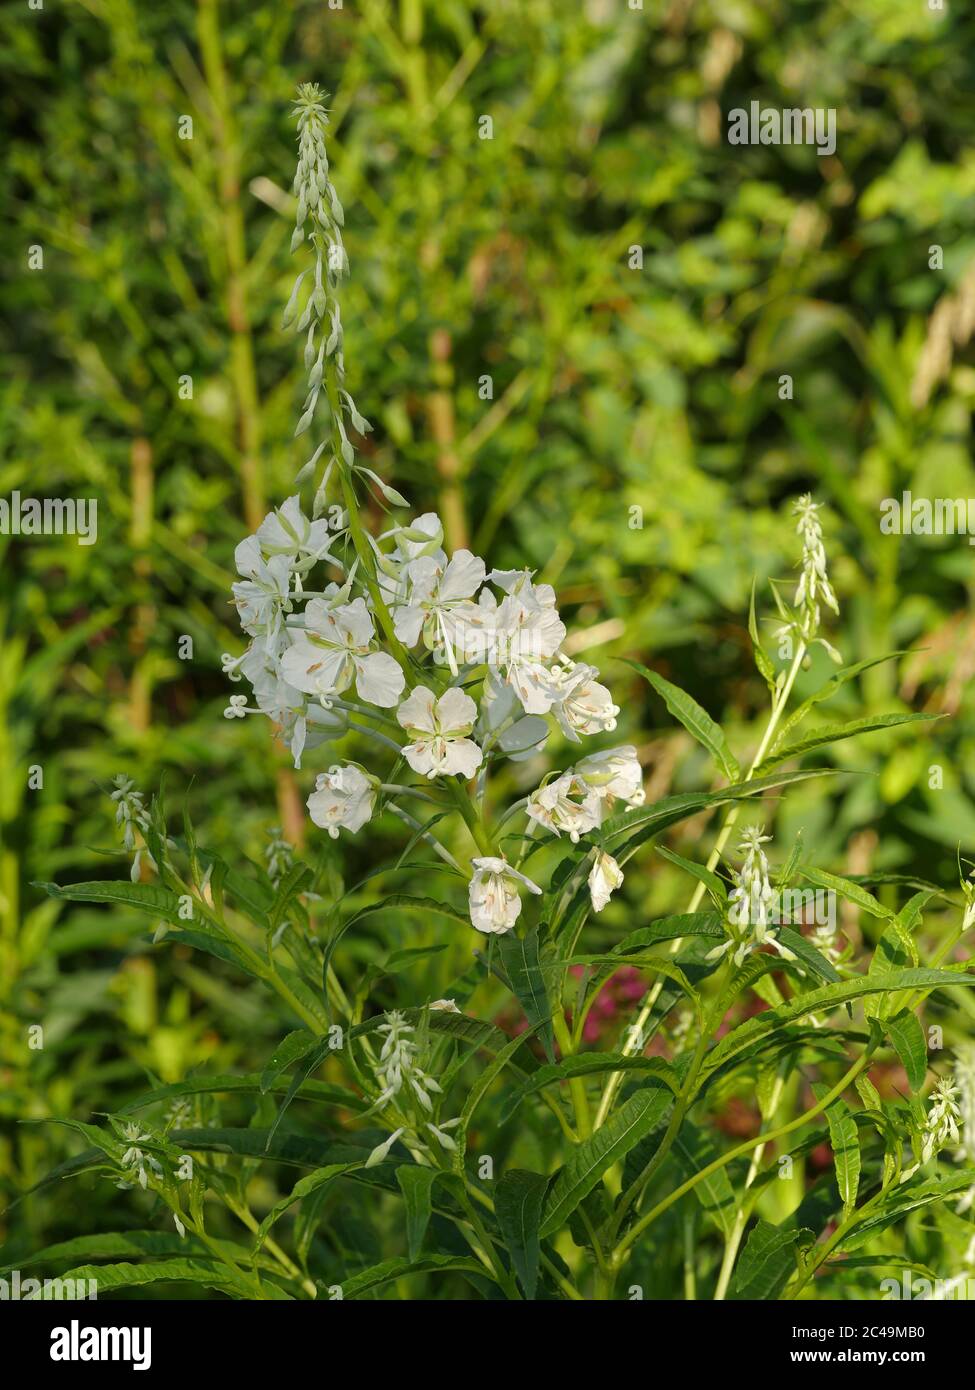 Chamaenerion angustifolium 'Album',  Epilobium angustifolium alba, White Rosebay Willowherb Stock Photo